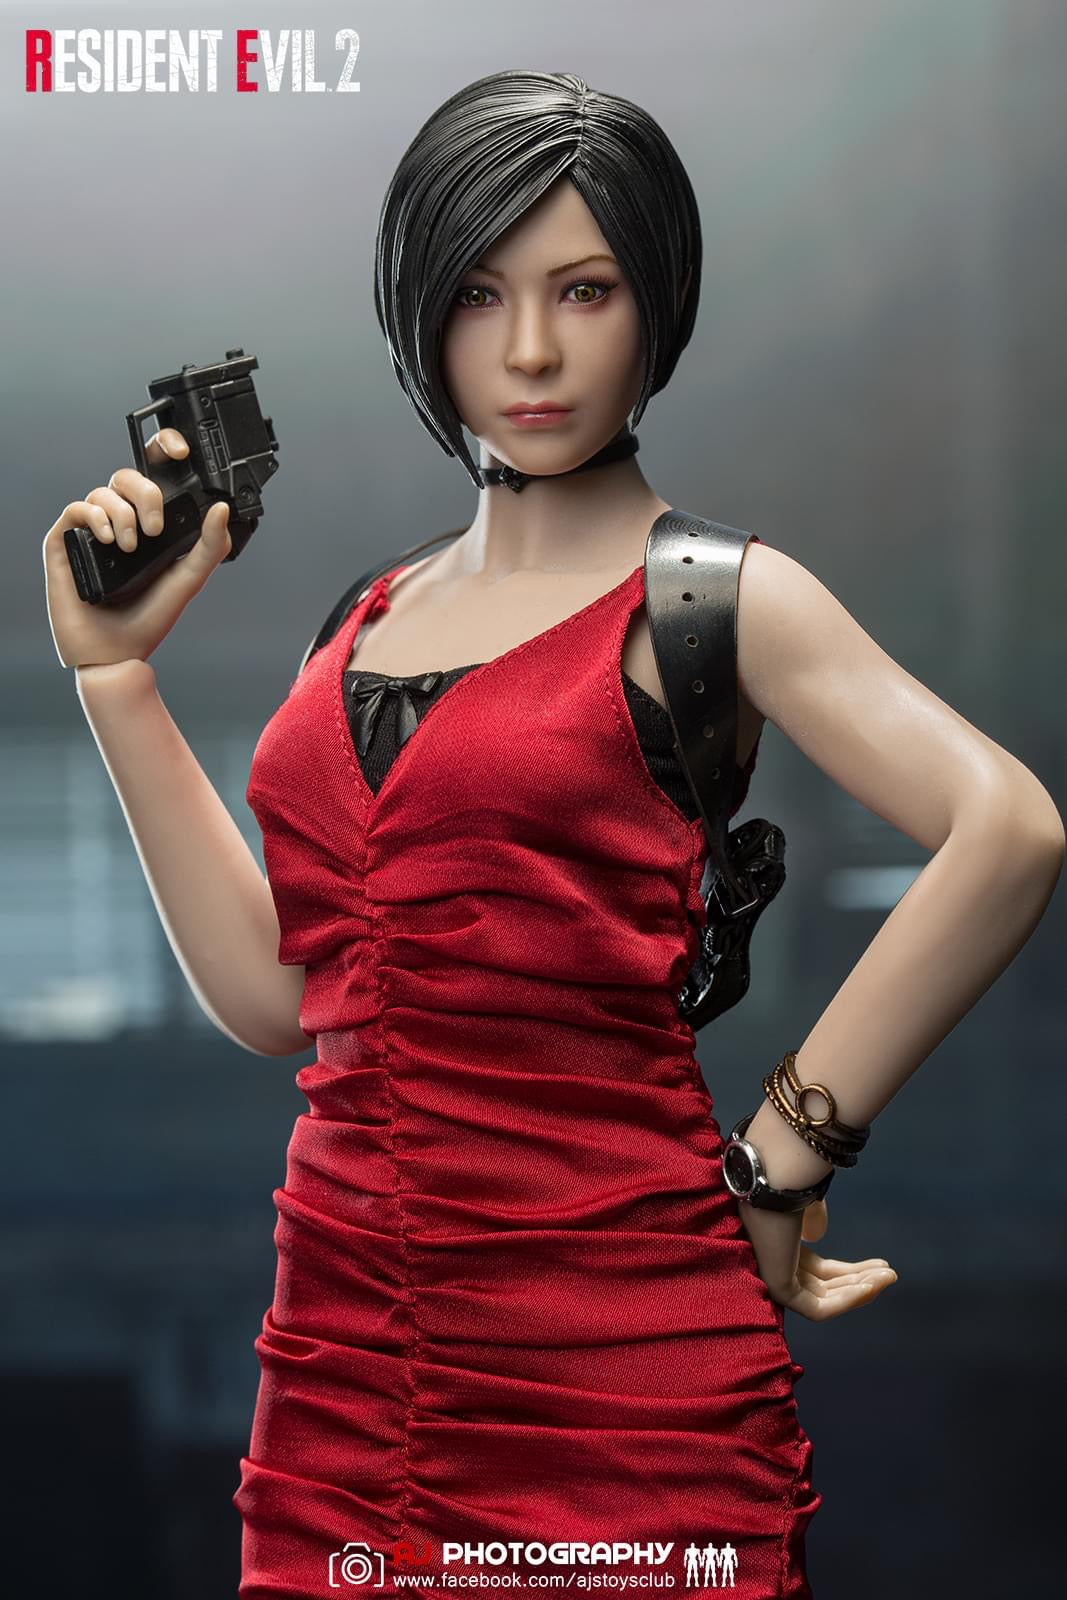 Pedido Figura Ada Wong - Resident Evil 2 marca Damtoys DMS039 escala 1/6